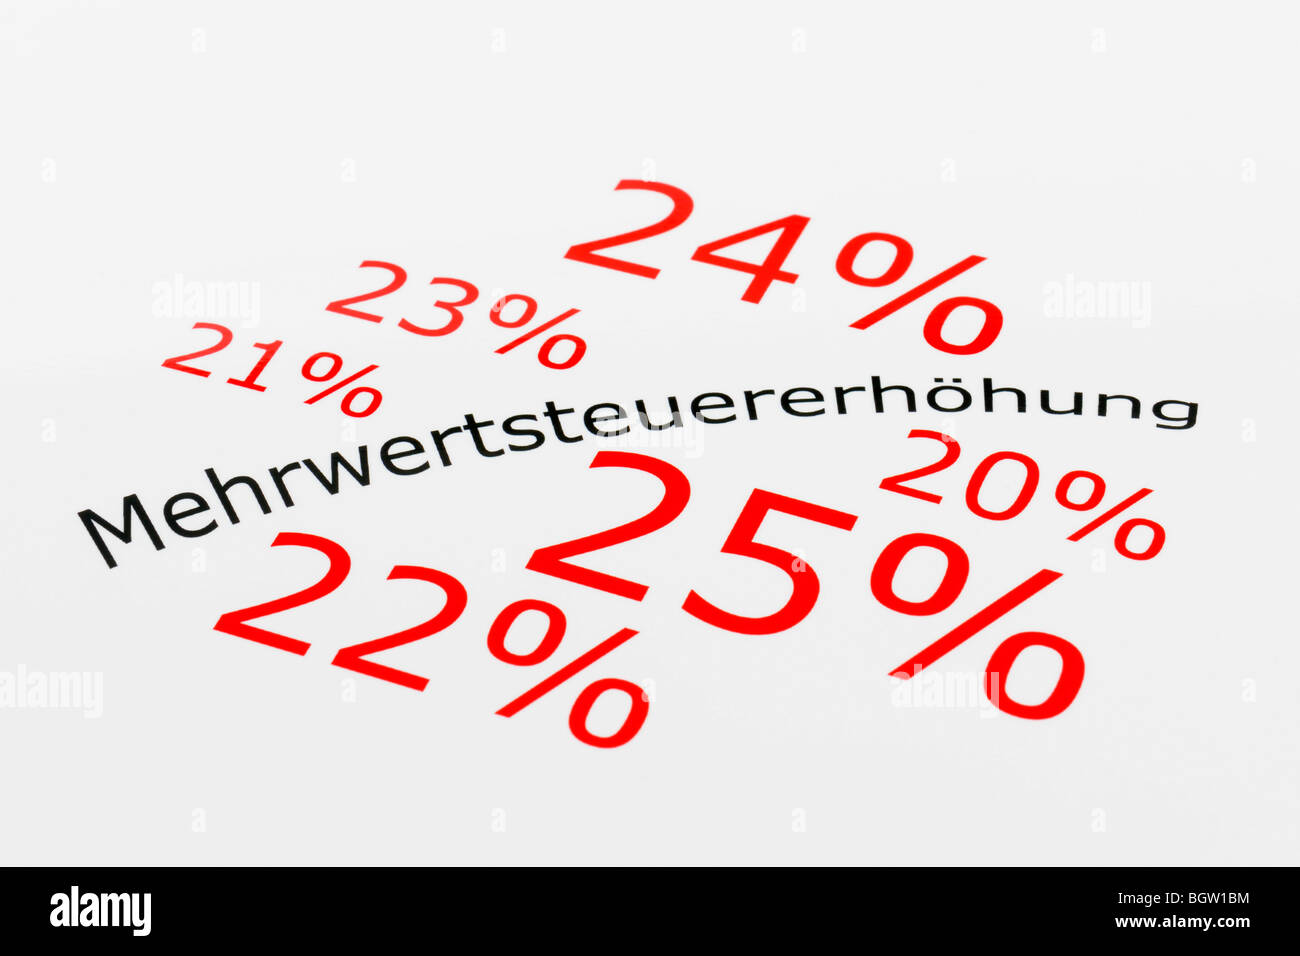 Mehrwertsteuererhoehung, German for VAT increase Stock Photo